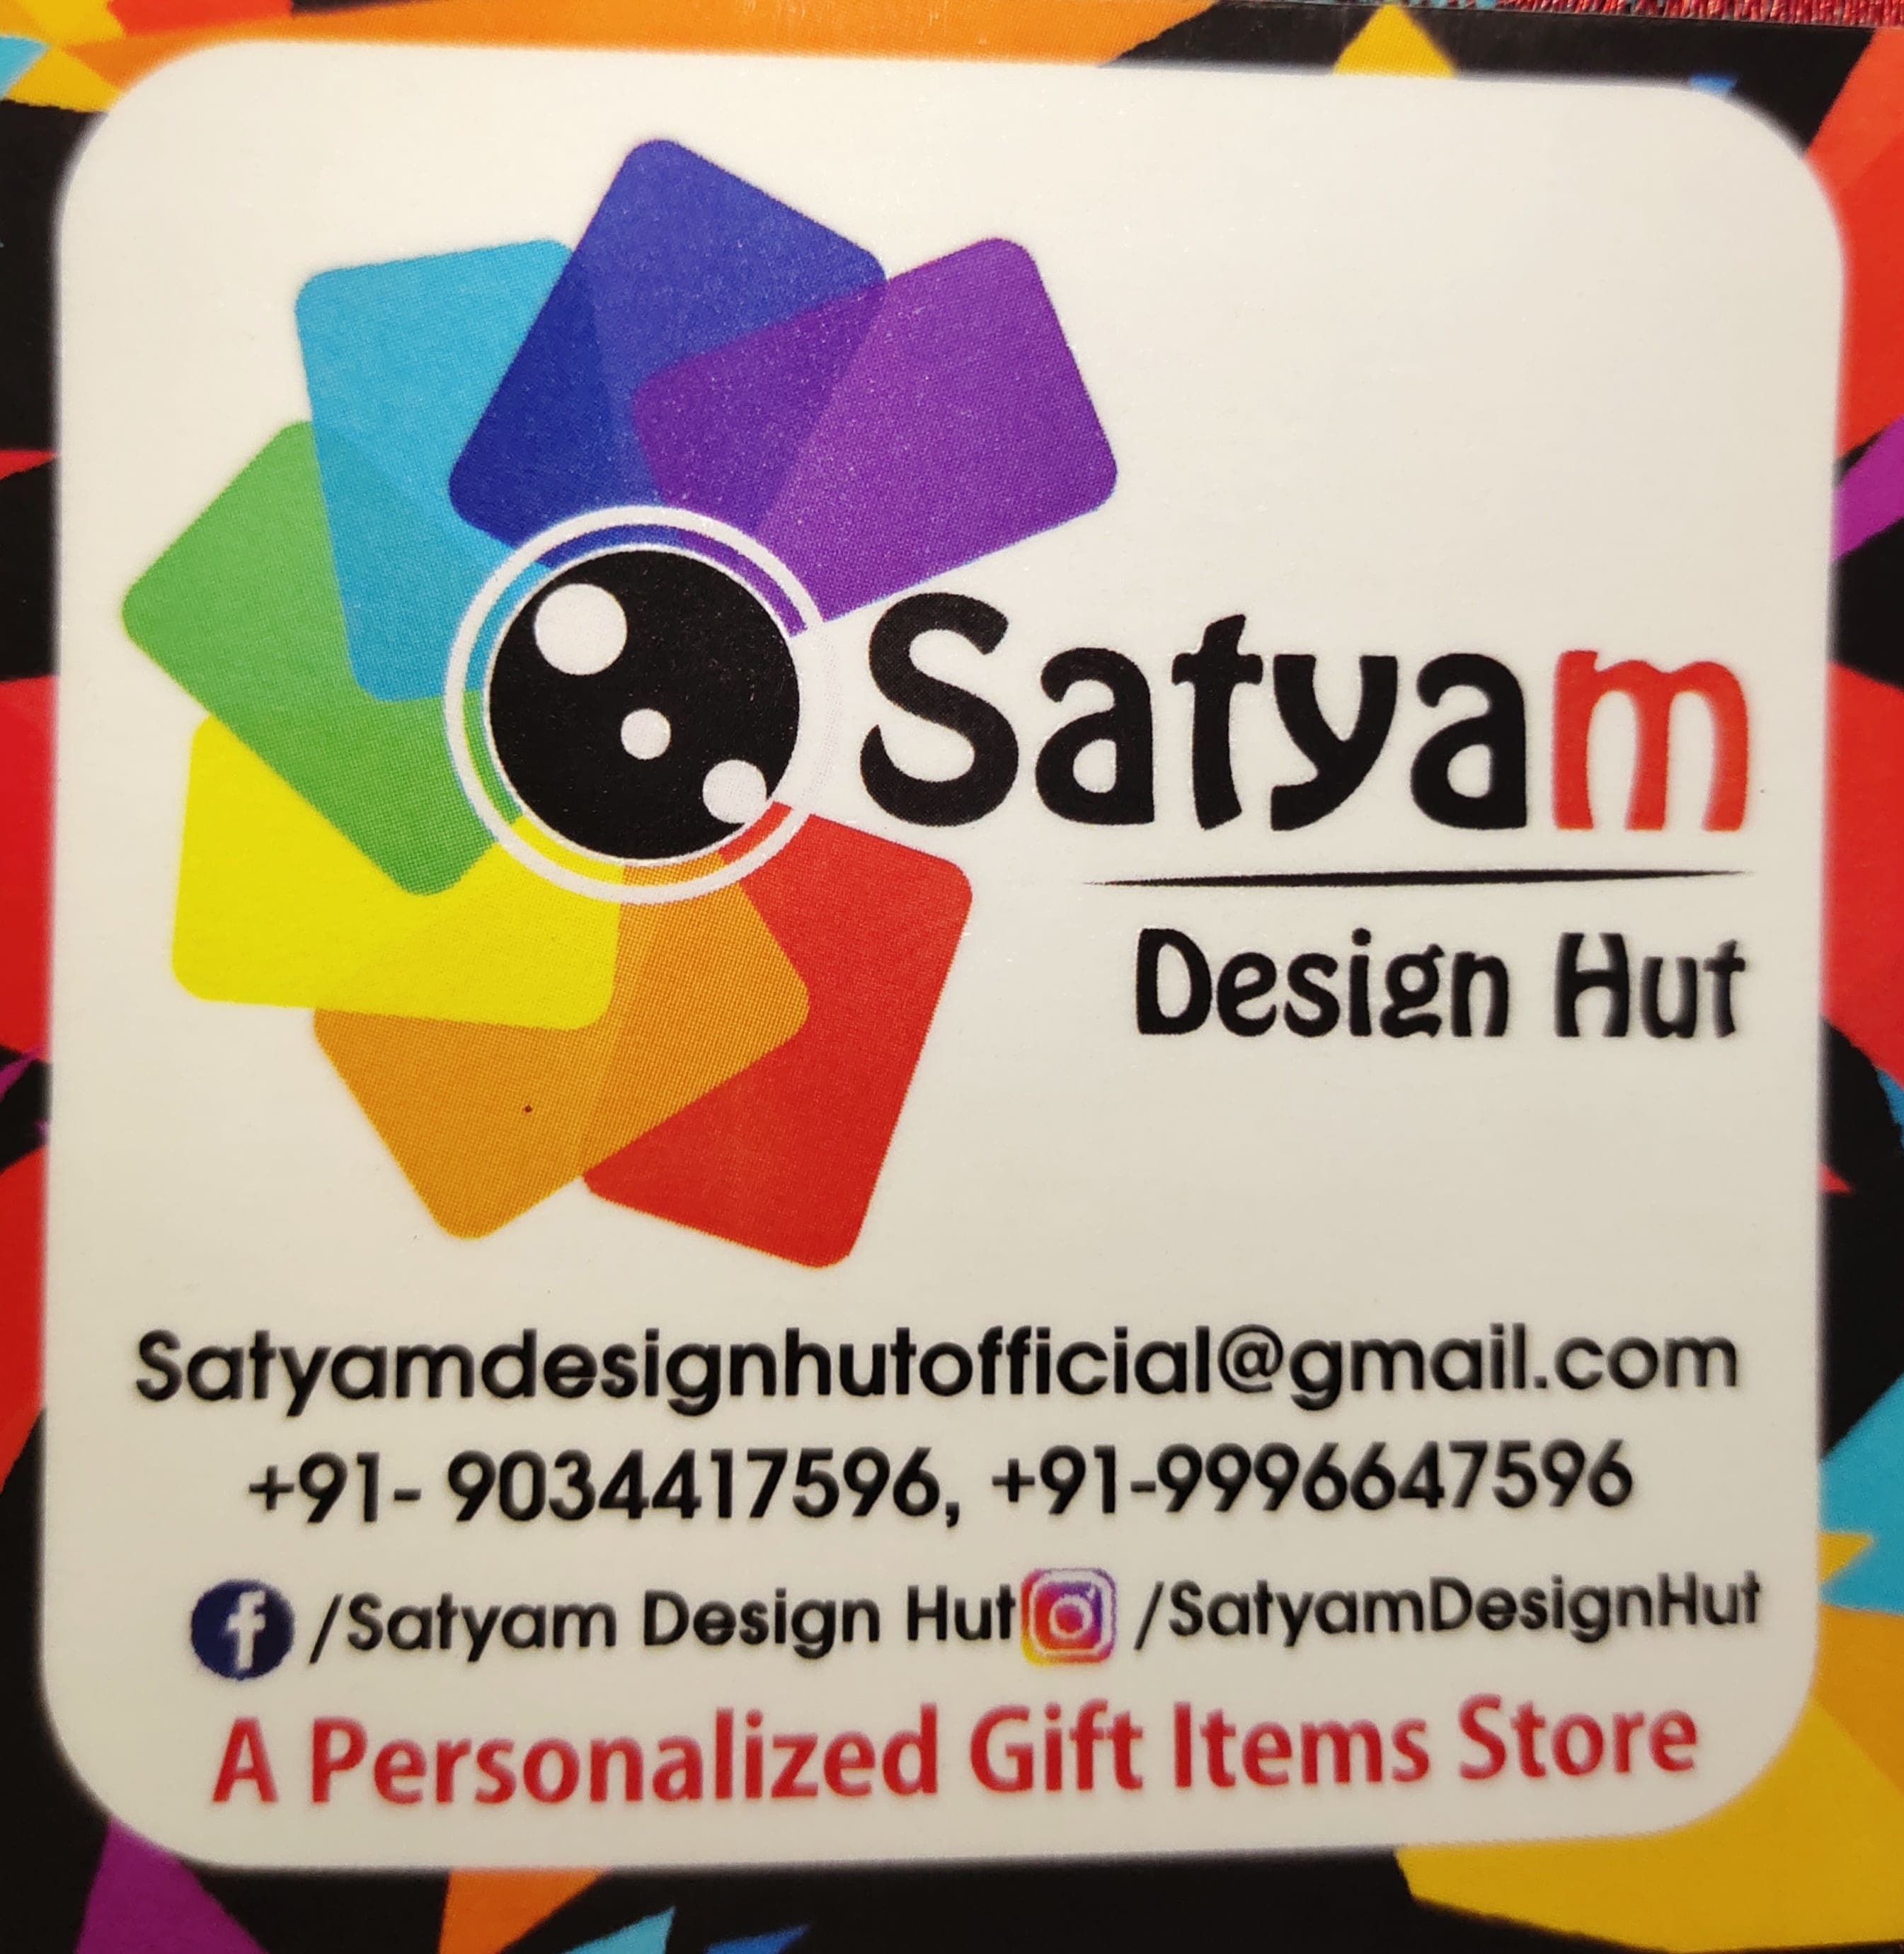 Satyam Design Hut